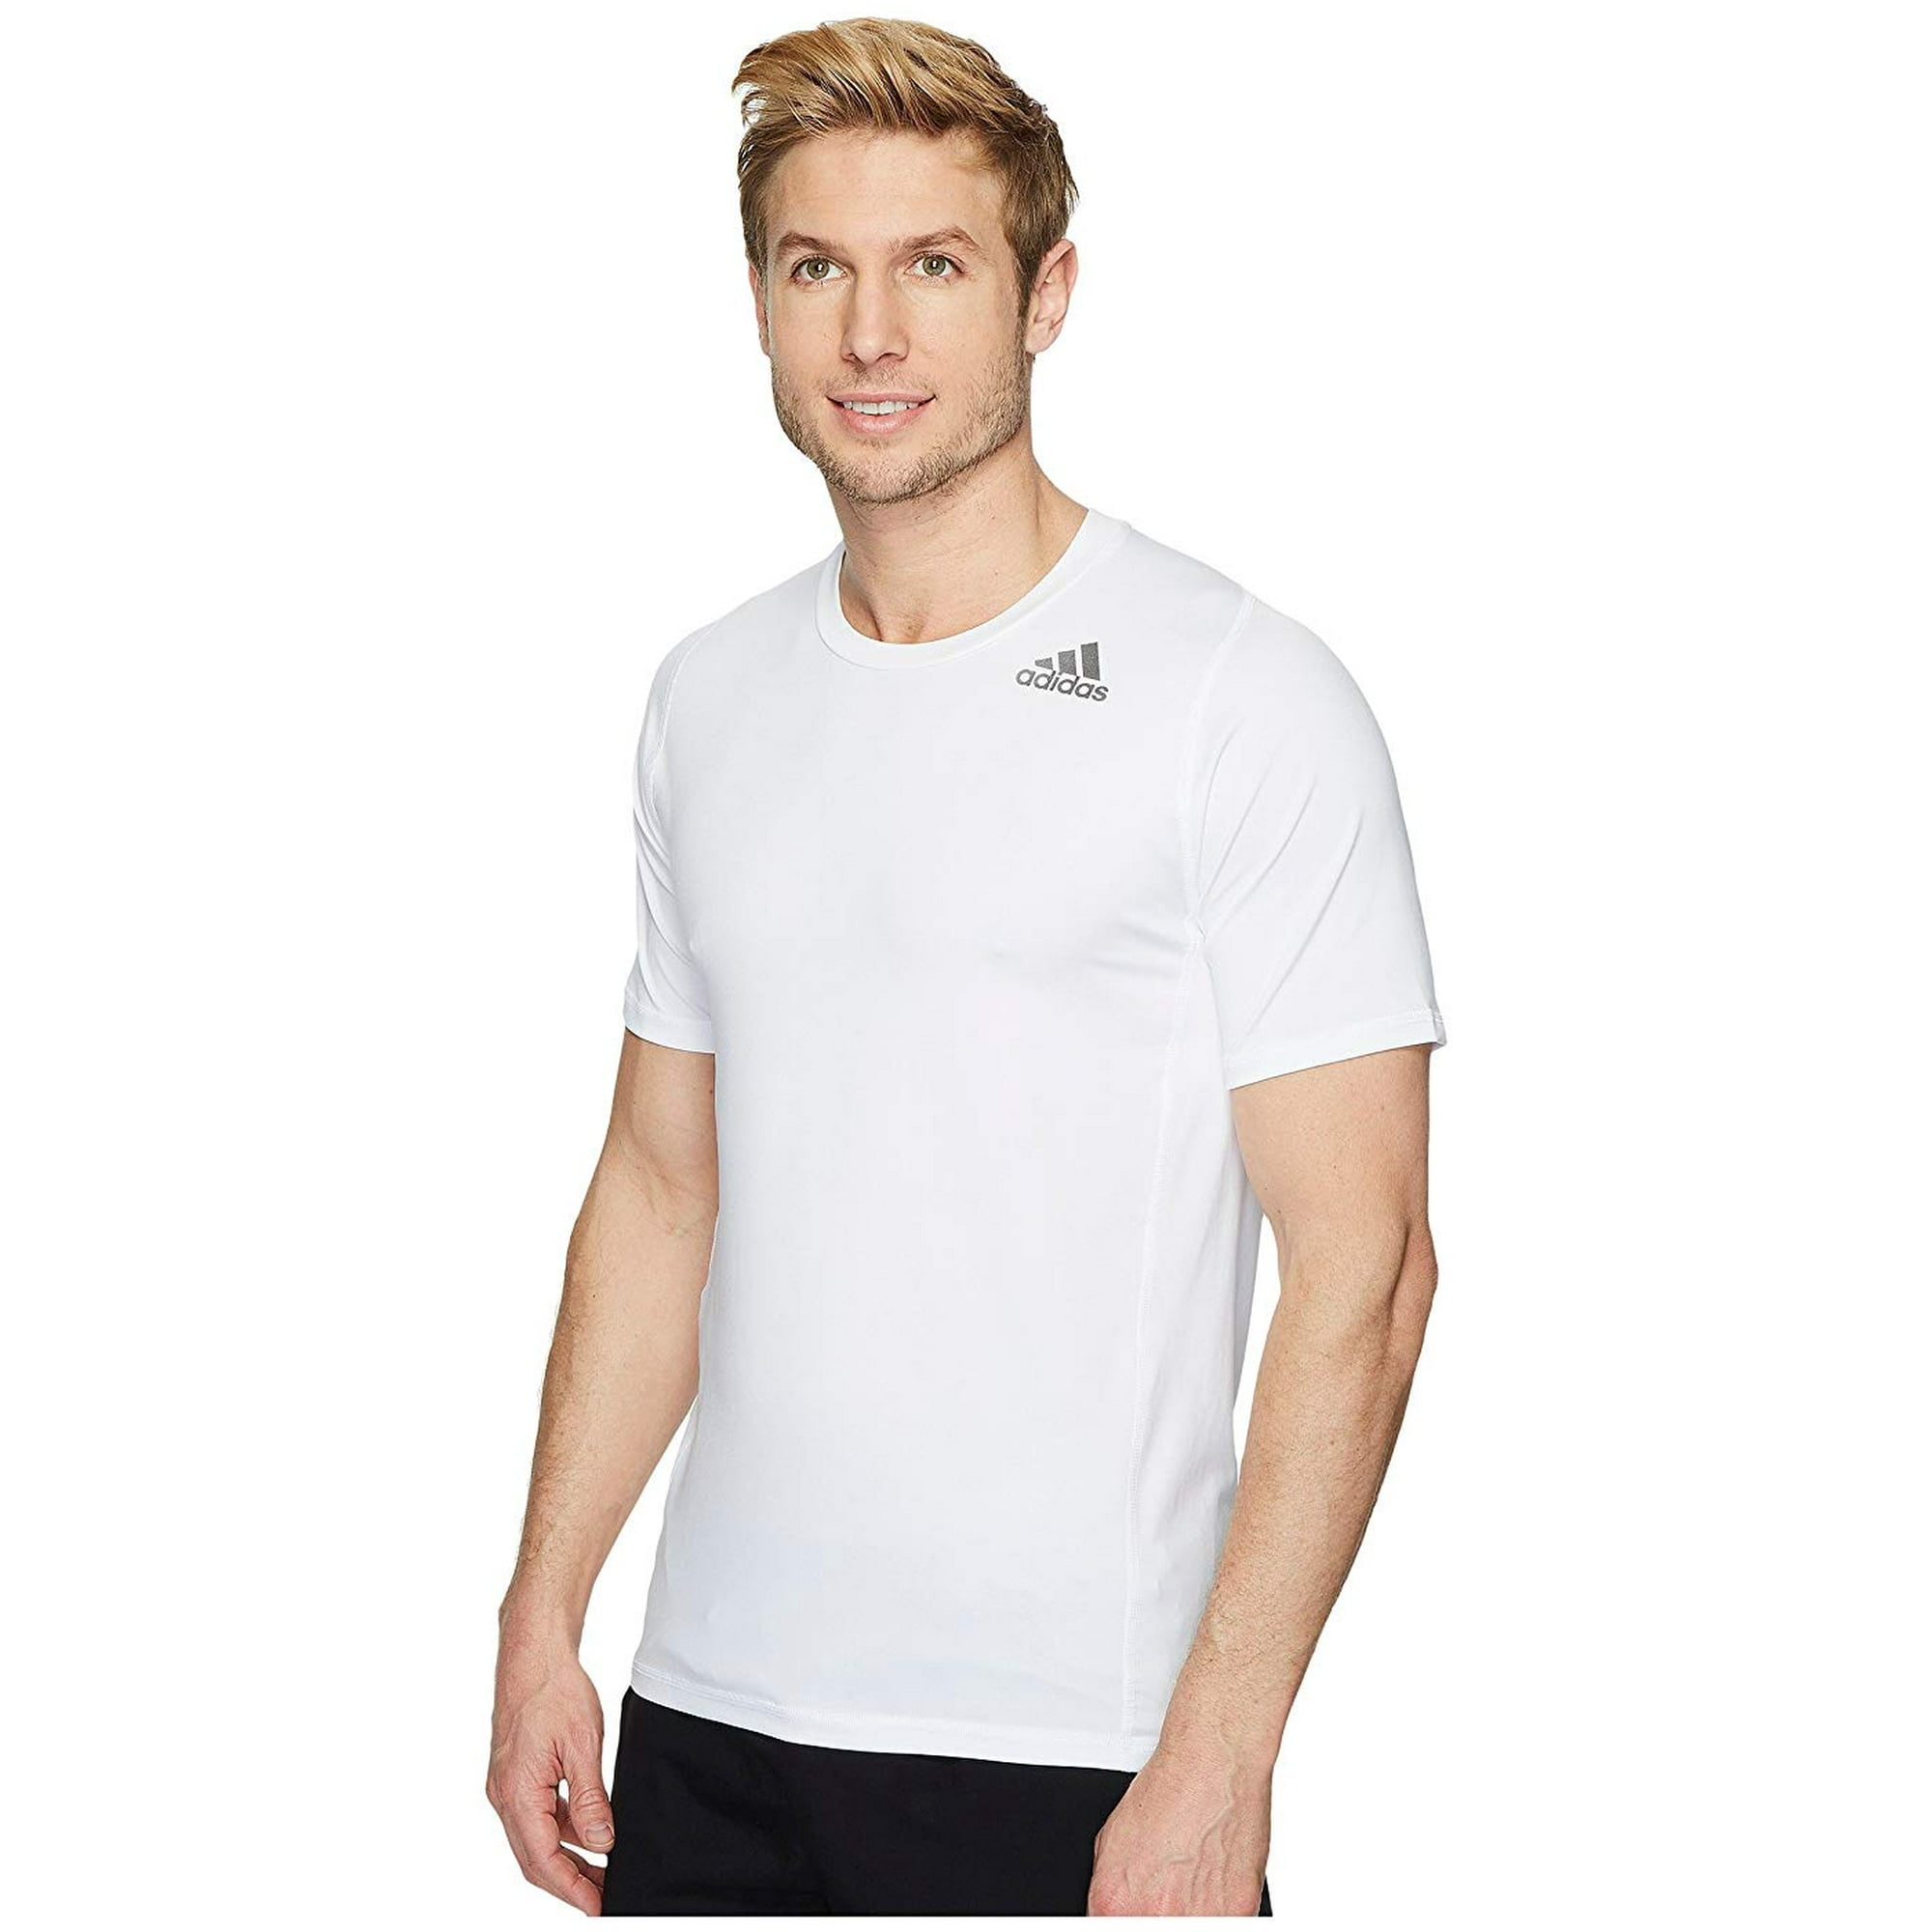 Frank Penetrate Follow us Adidas Men's Alphaskin Fitted Climalite T-Shirt White Size Medium -  Walmart.com